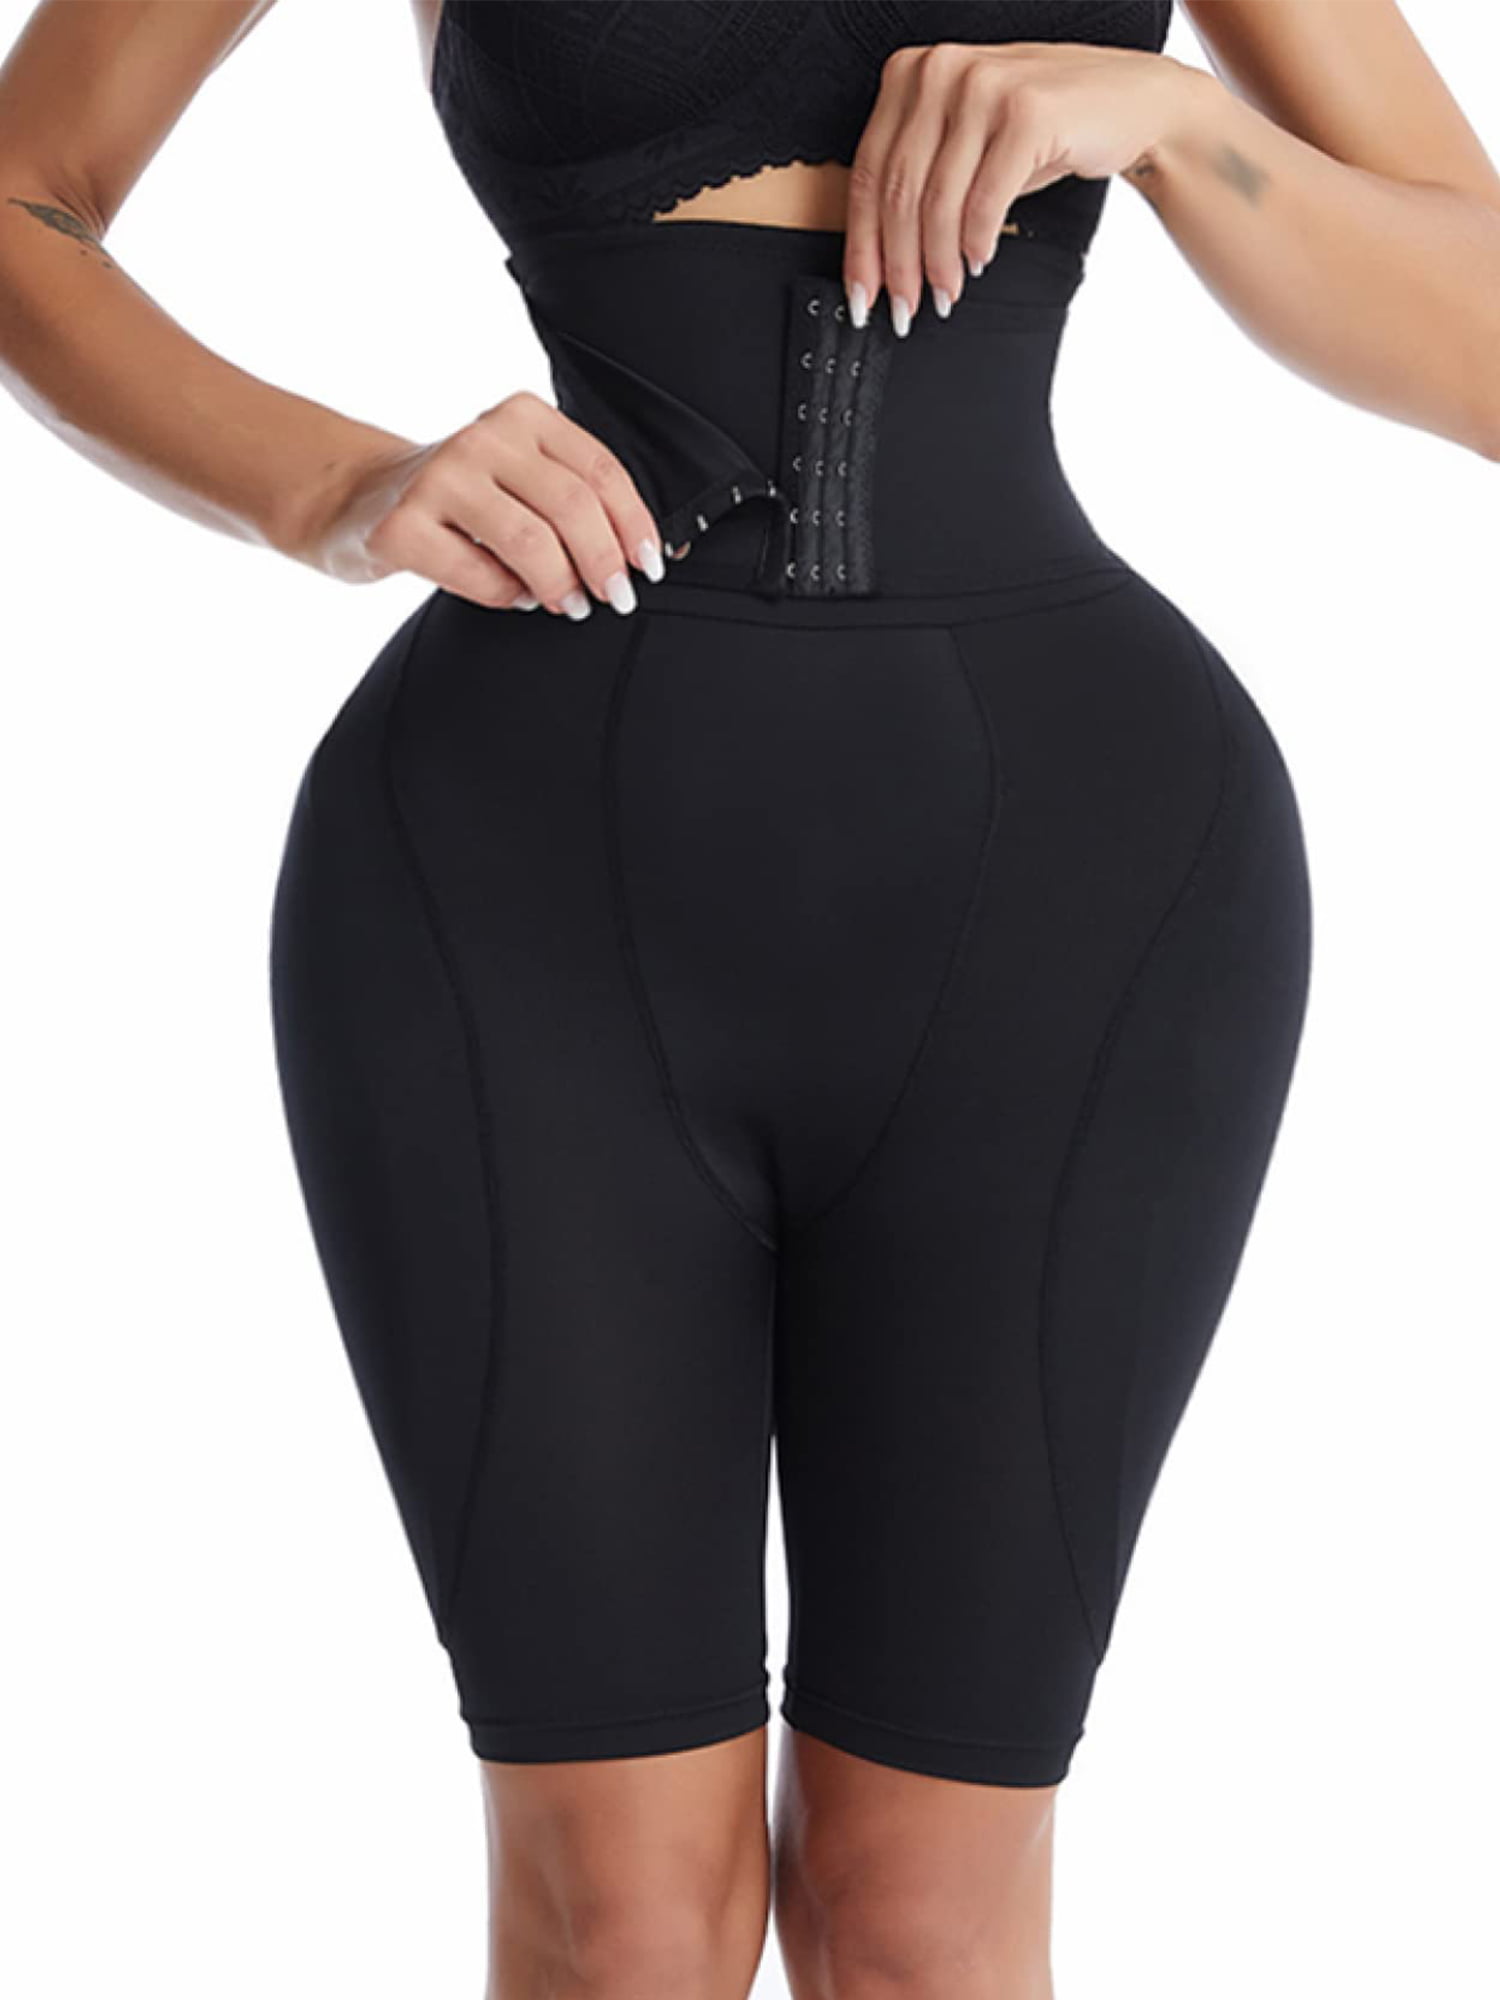 MERYOSZ Butt Lifter Shapewear for Women Tummy Control Panties High Waist Trainer Thigh Slimmer Shorts Body Shaper Underwear 